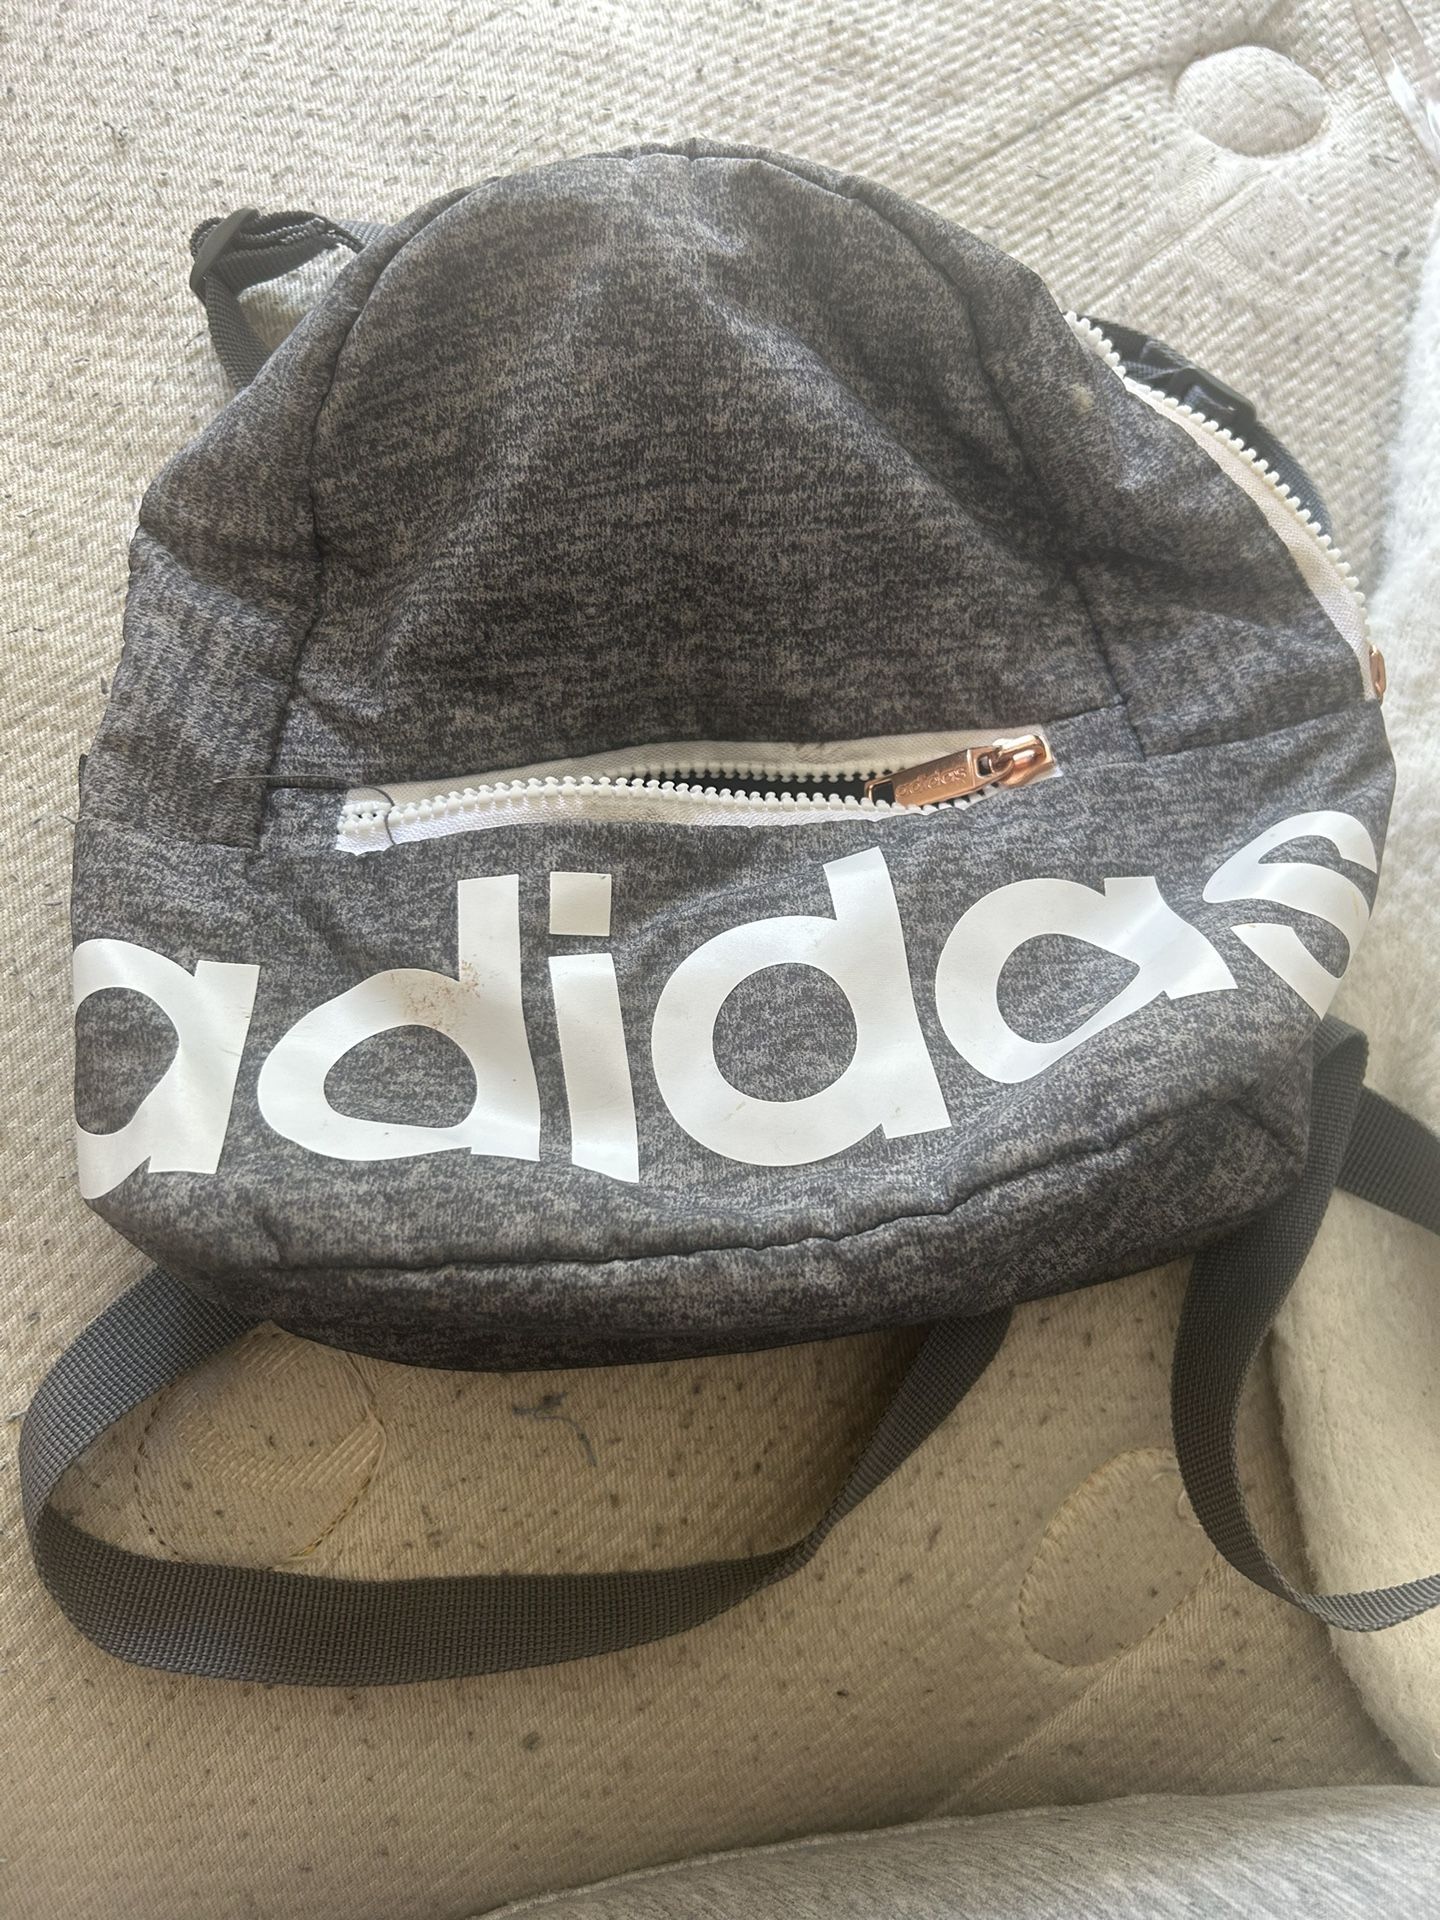 Grey Adidas Backpack